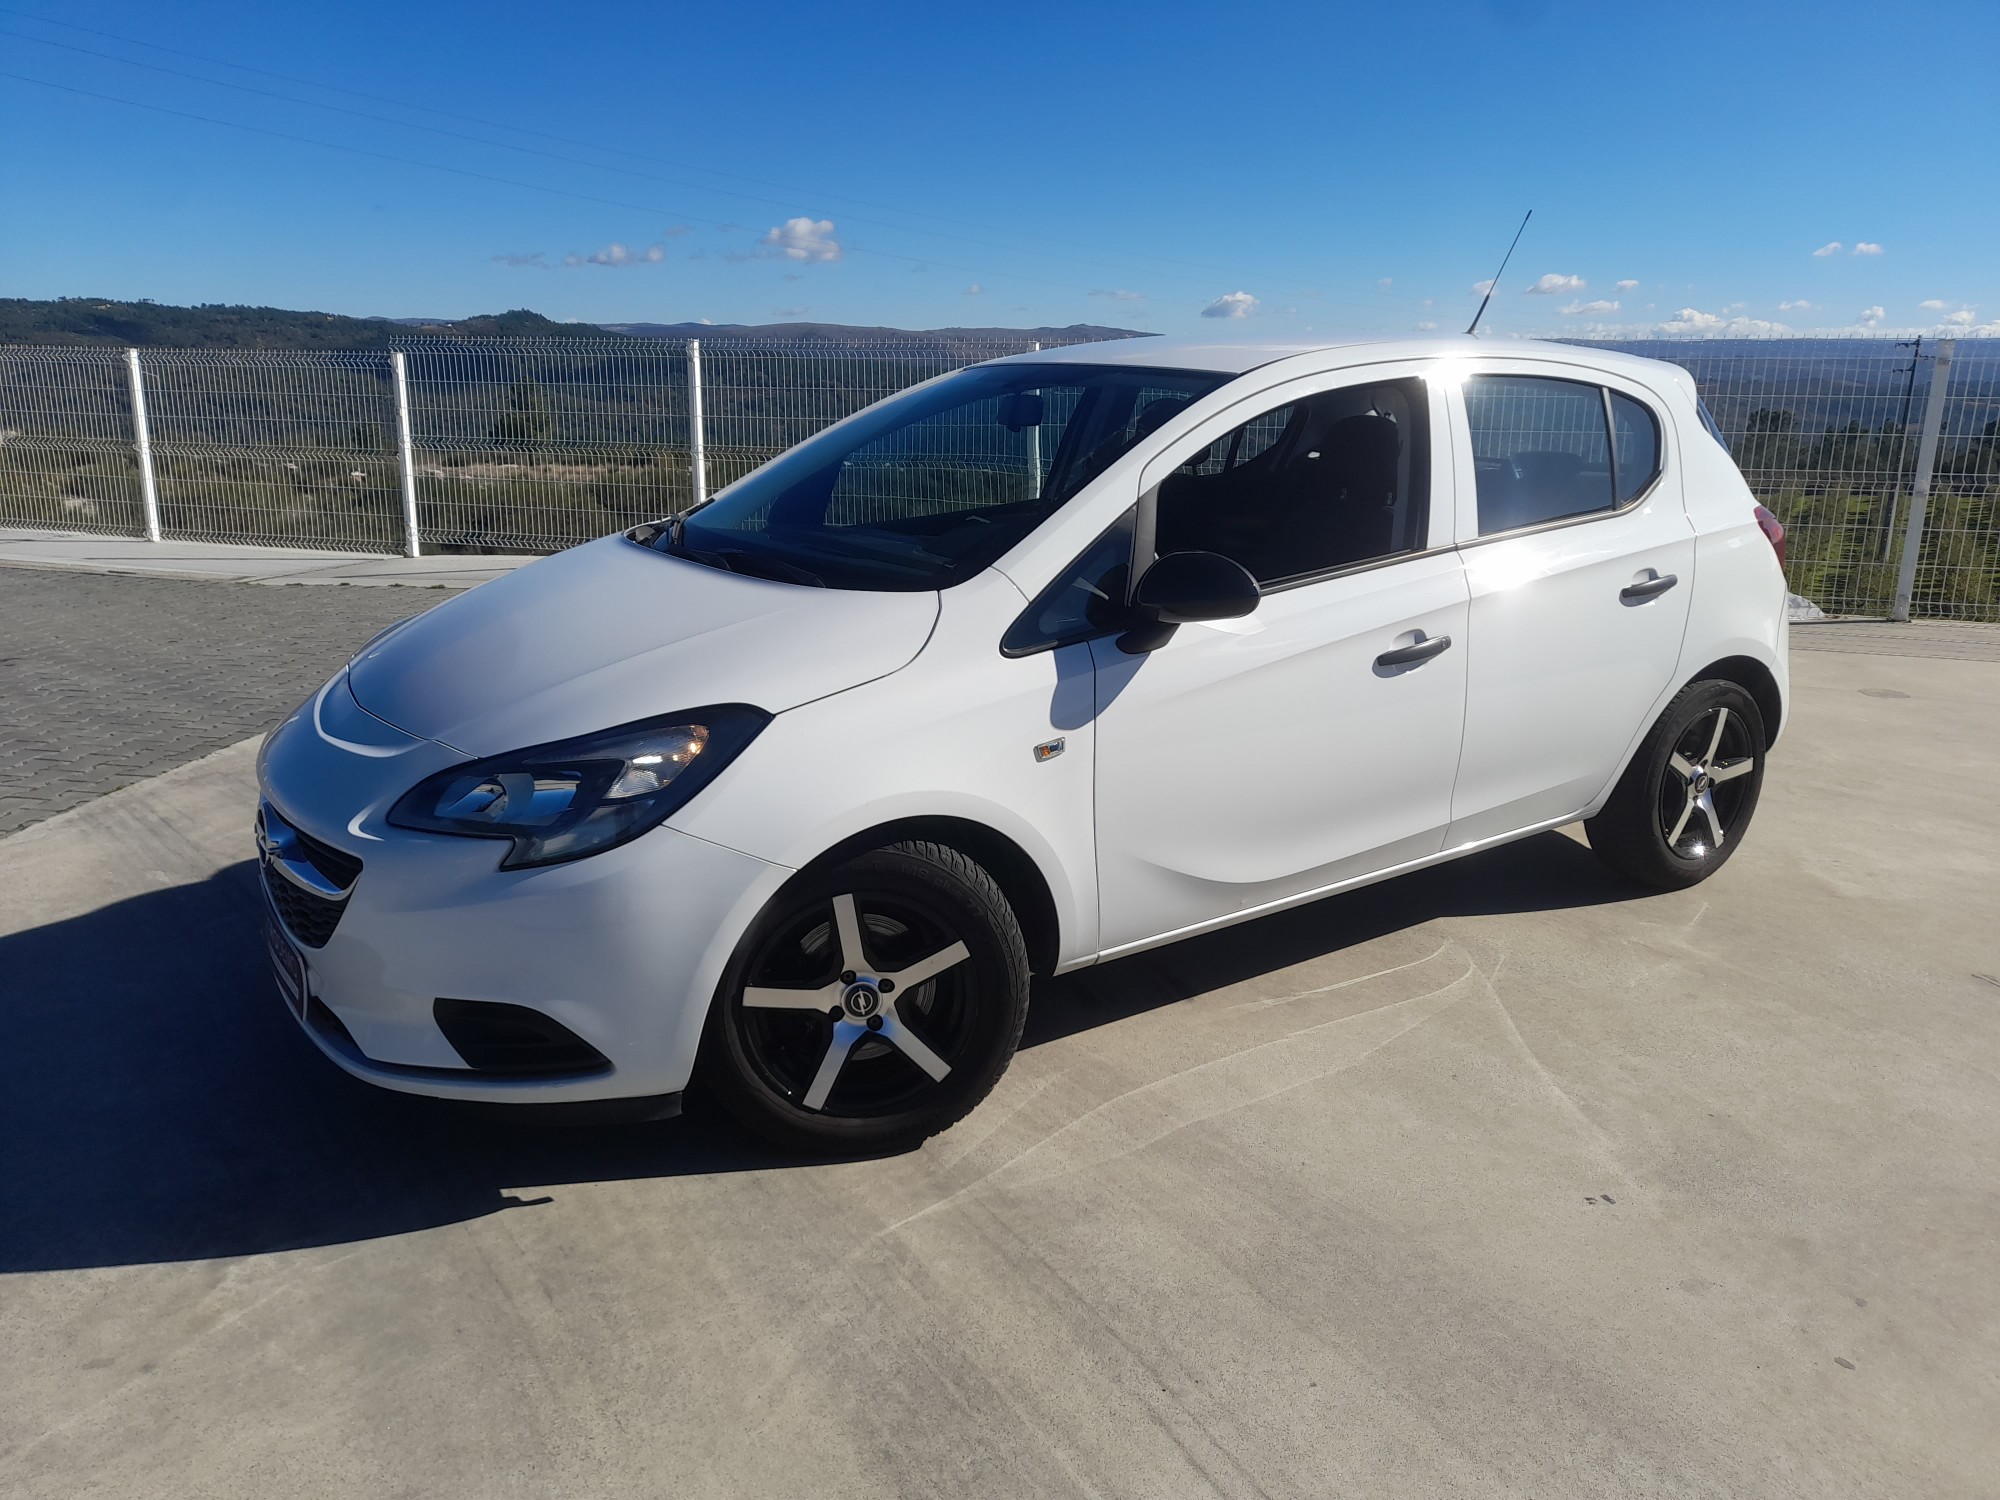 Opel corsa 1.3 cdti